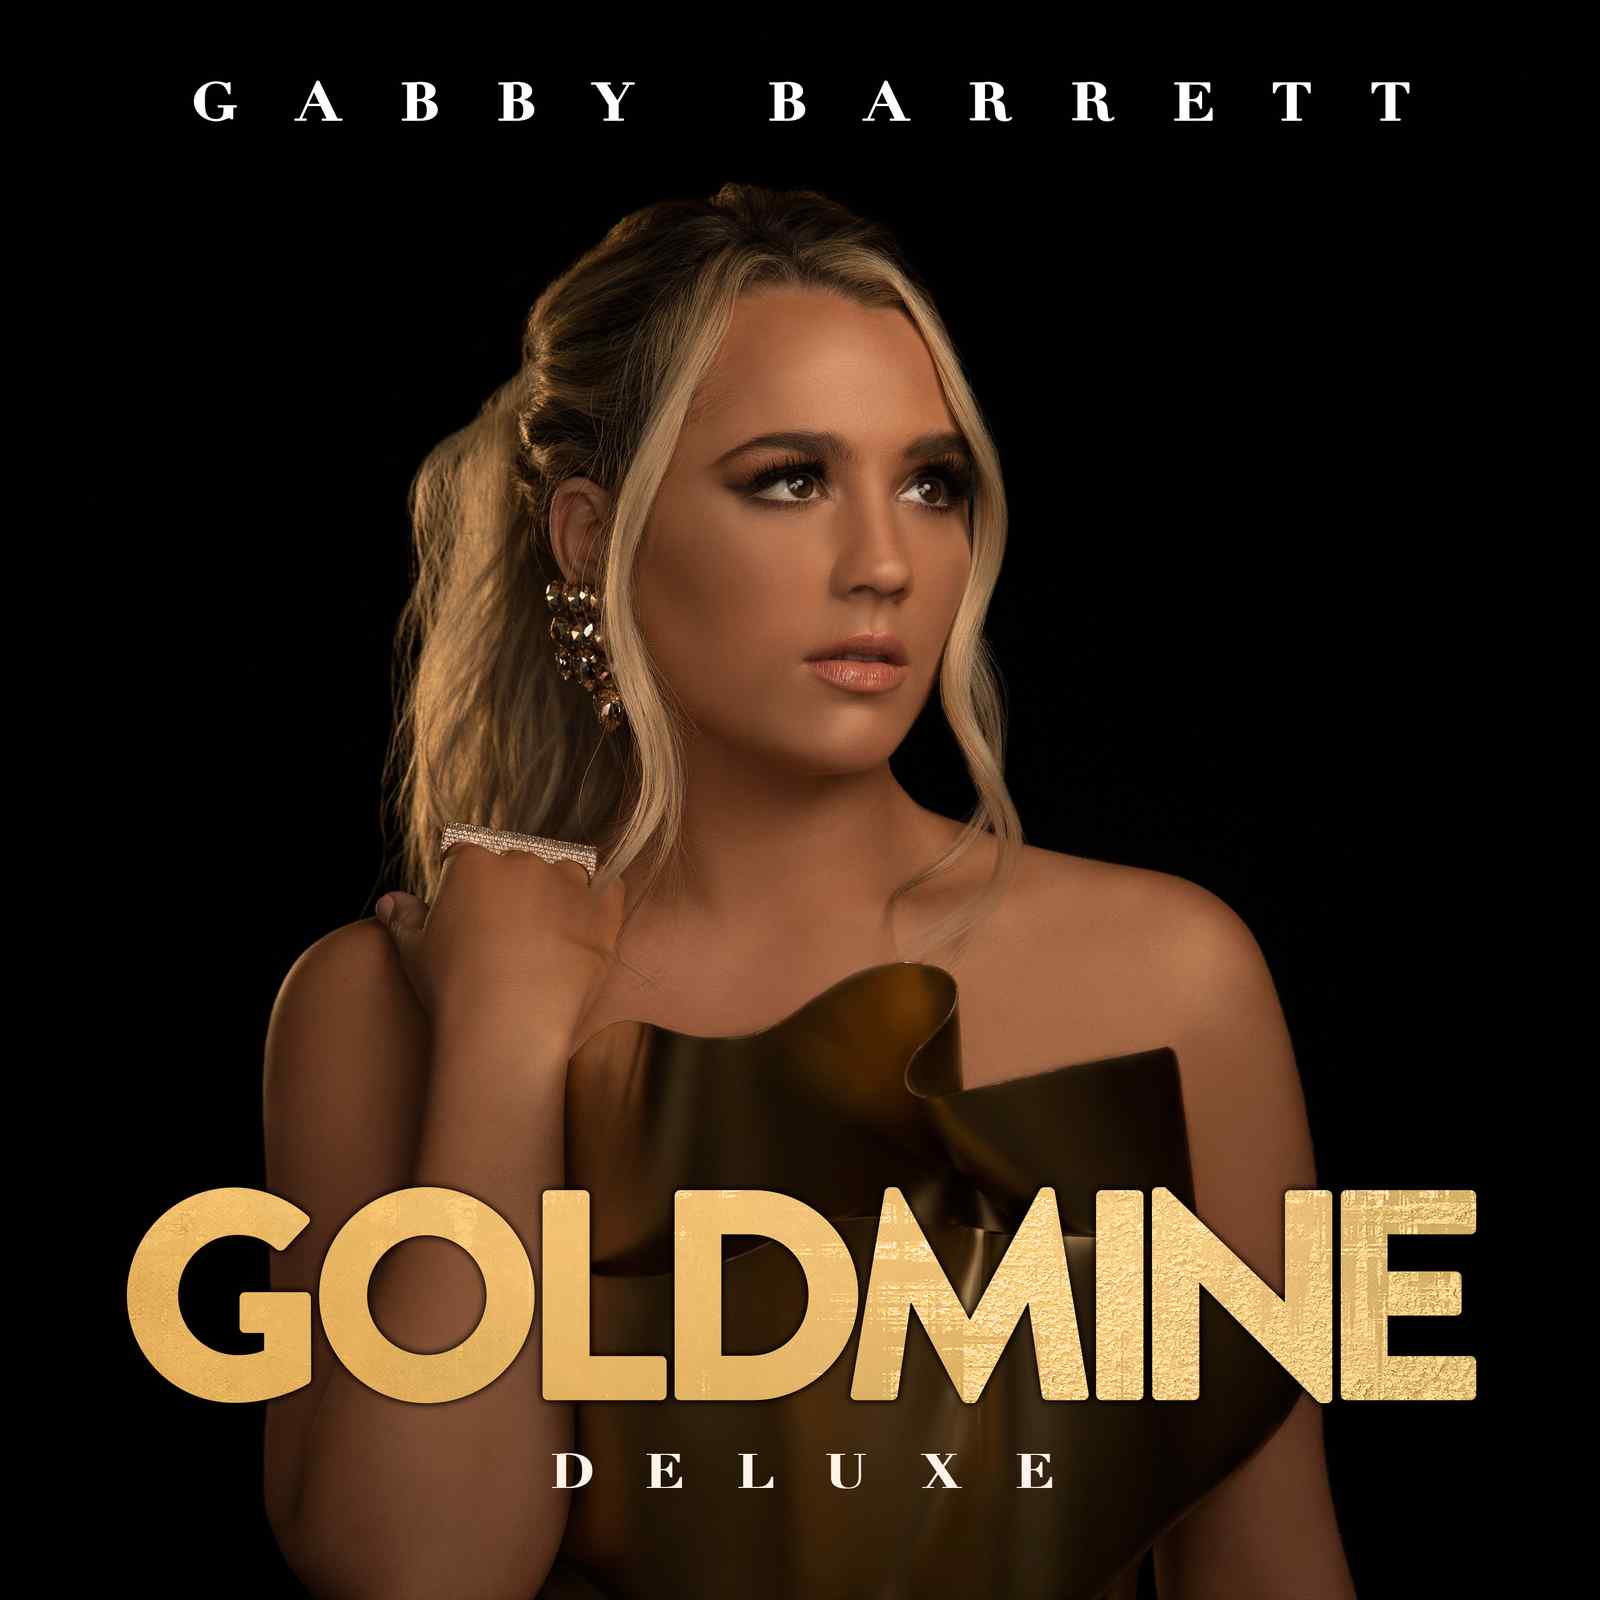 Goldmine (Deluxe) by Gabby Barrett